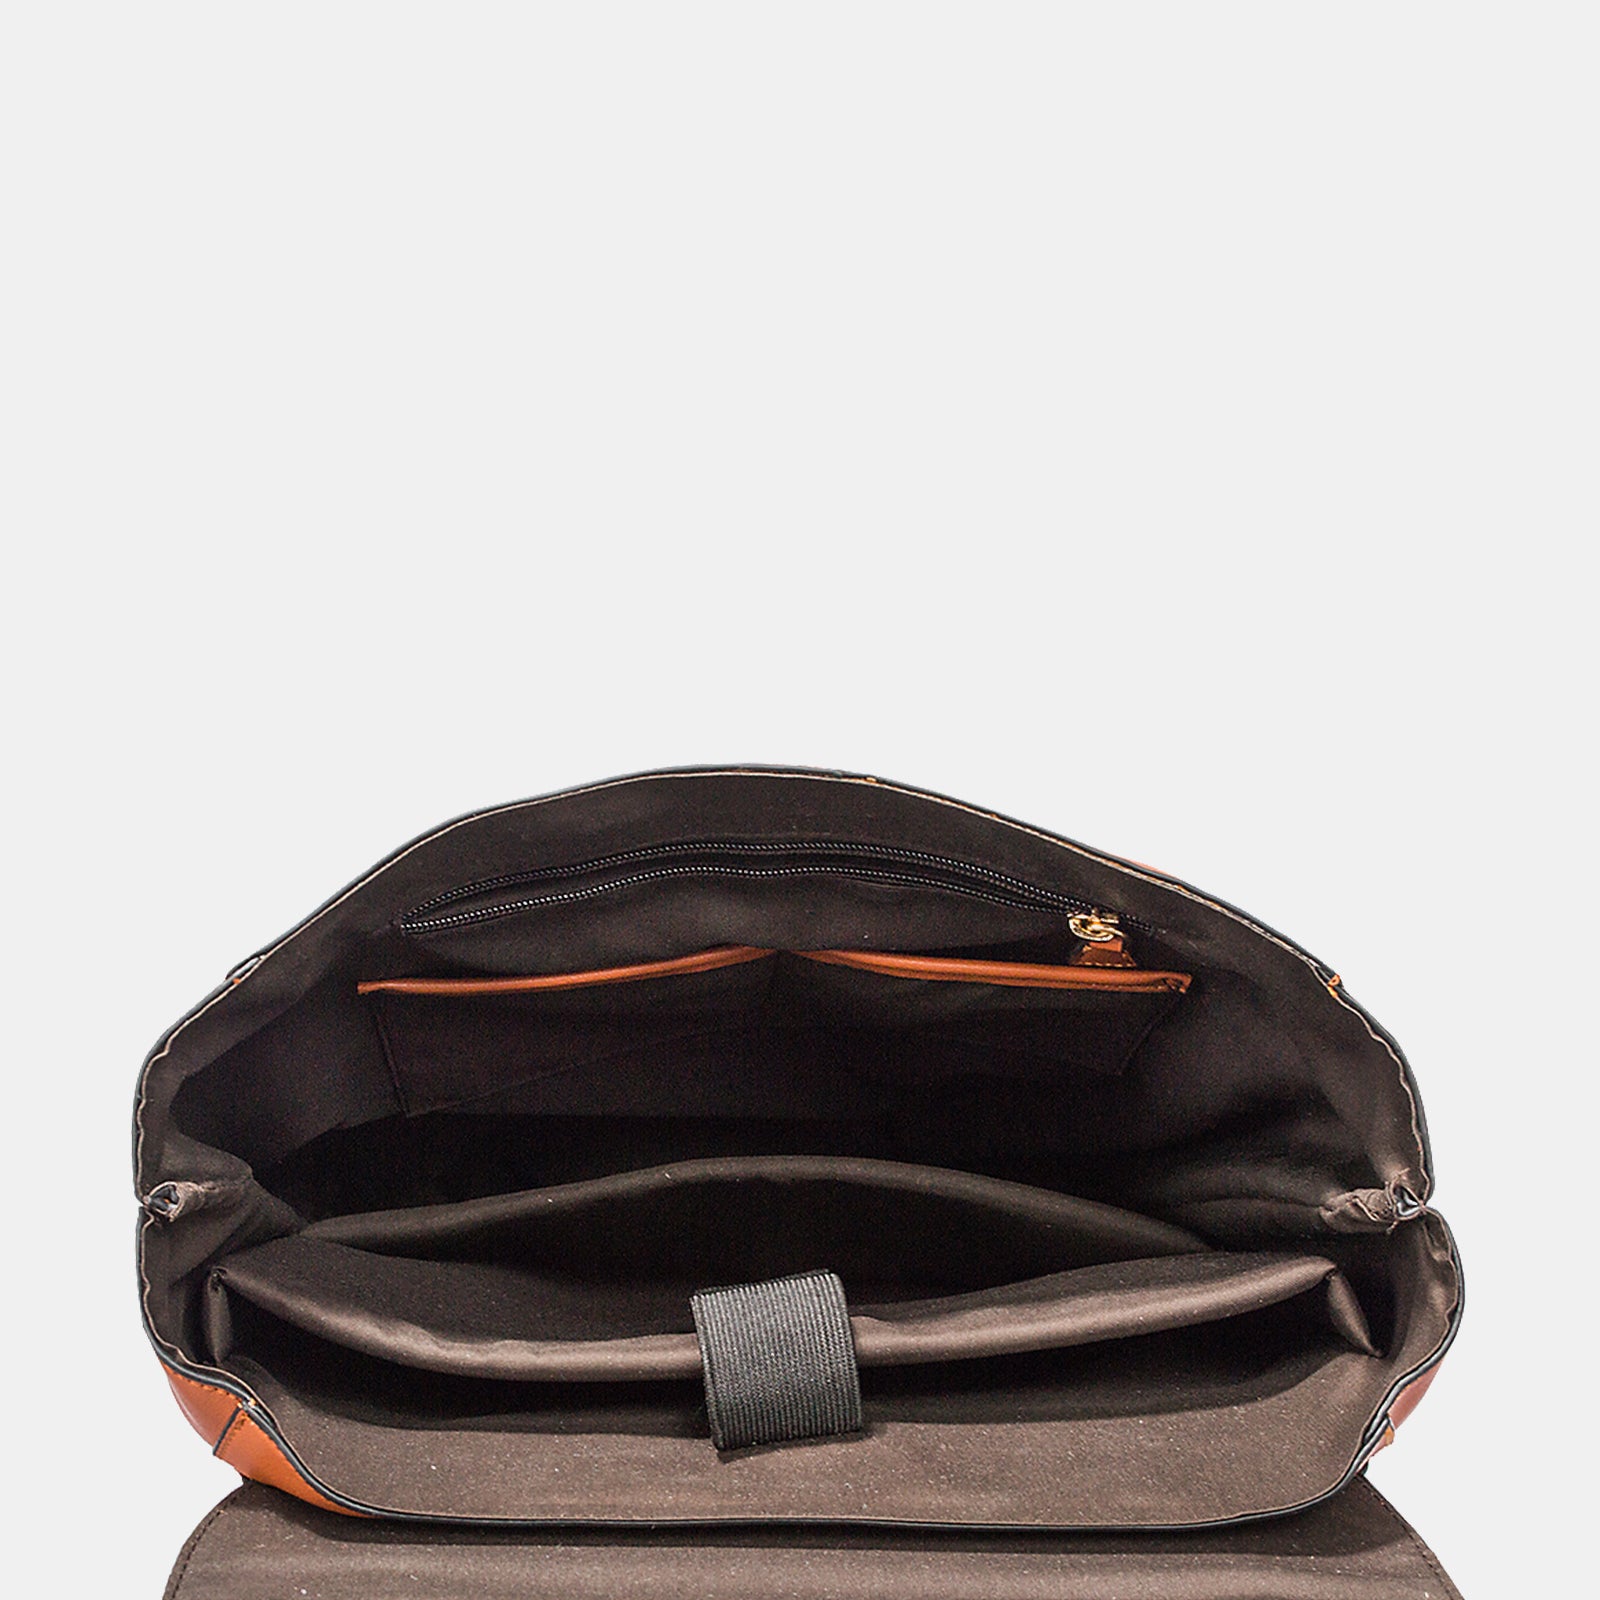 Estarer Women Leather 15.6 Inch Laptop Backpack College Bag Brown